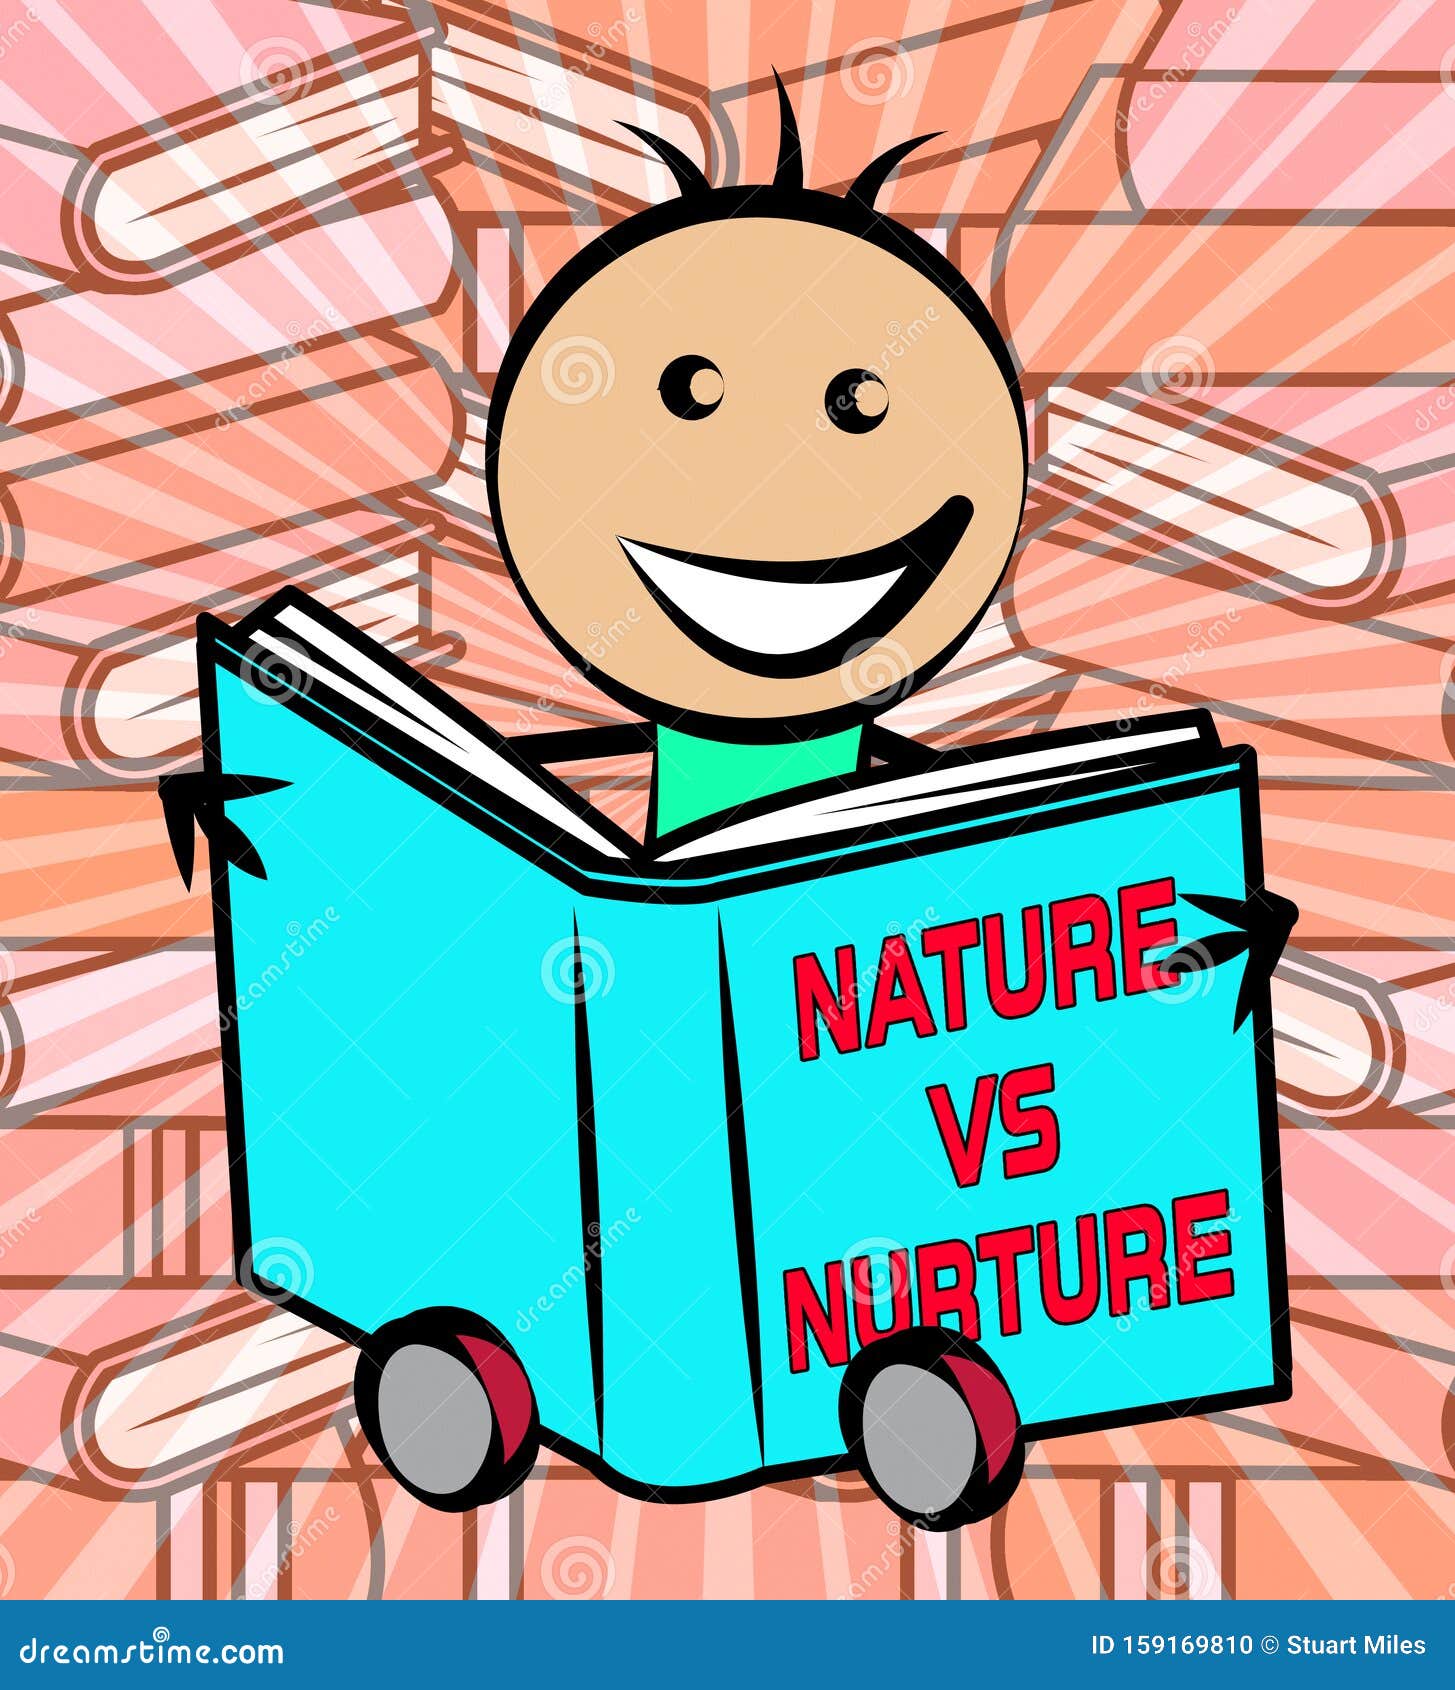 nature vs nurture development